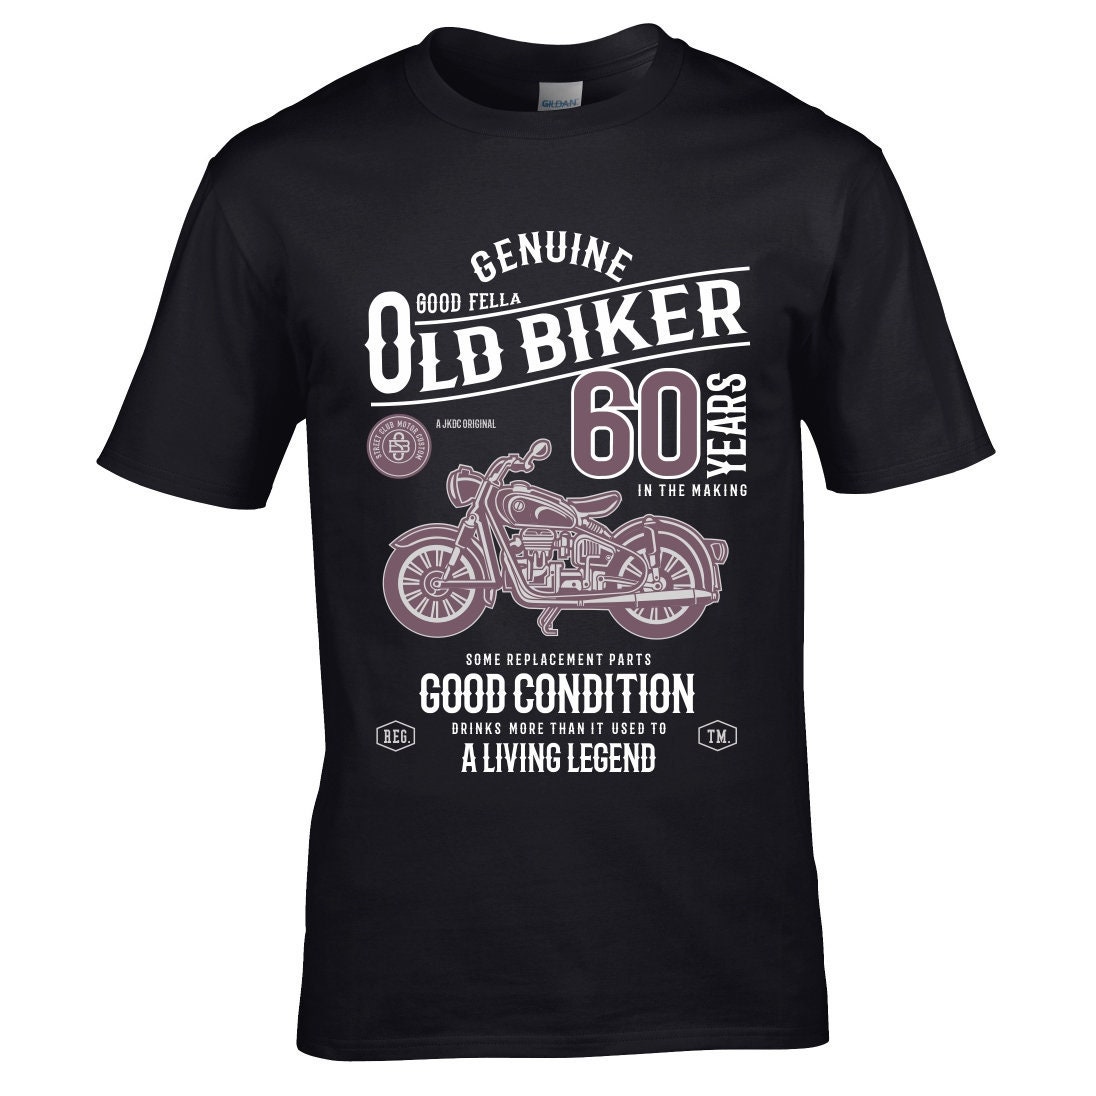 Premium Funny 60 Year Old Biker Retro Style Classic Motorbike Motif For 60Th Birthday Anniversary Gift Men’s Black T-Shirt Top